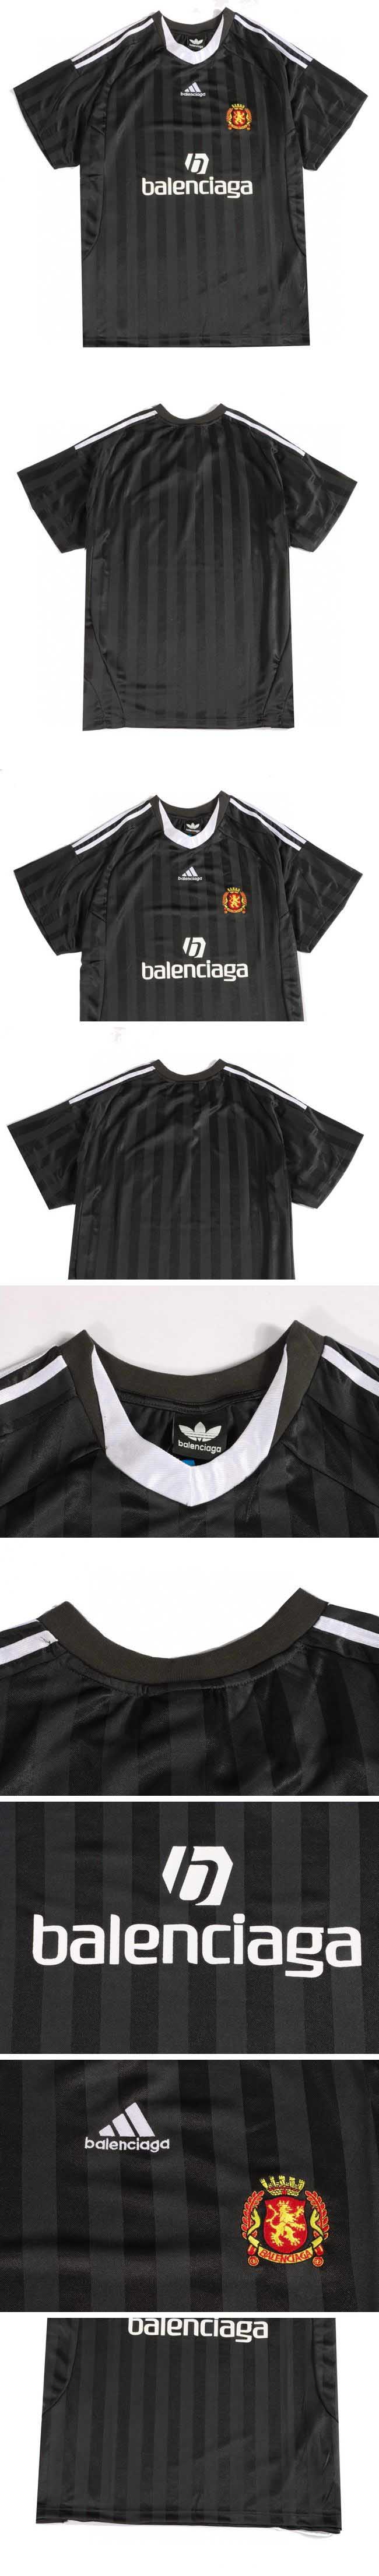 Balenciaga x Adidas Football Game Shirt バレンシアガ x アディダス フットボール サッカー ゲームシャツ